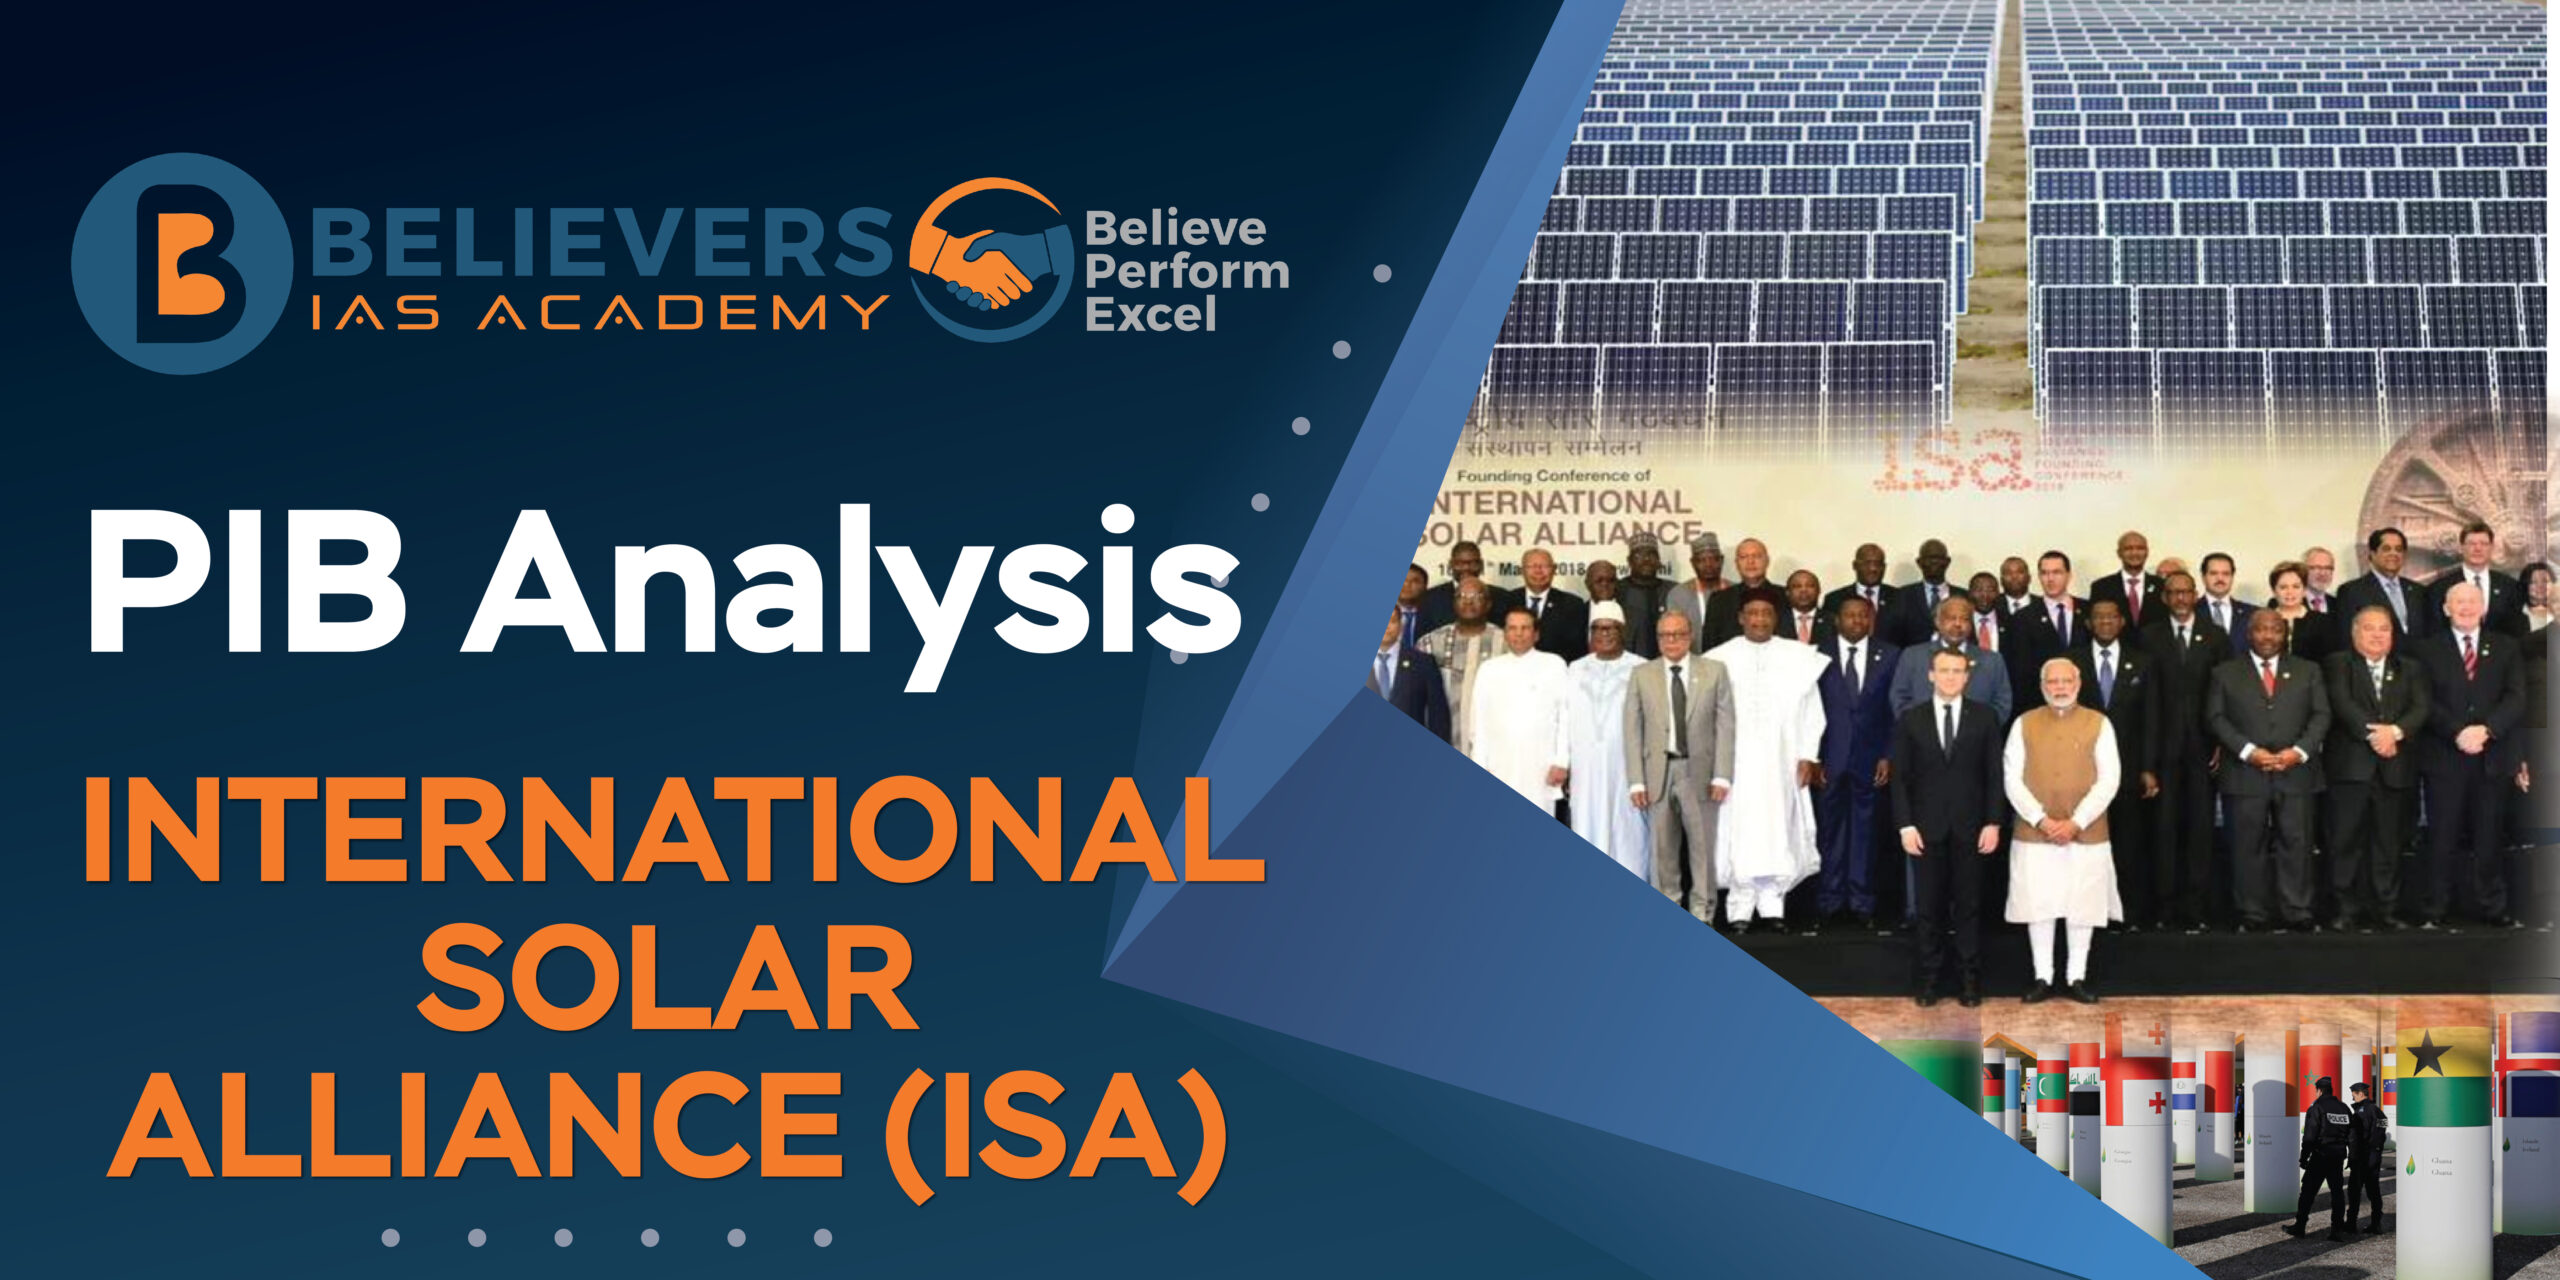 International Solar Alliance (ISA)